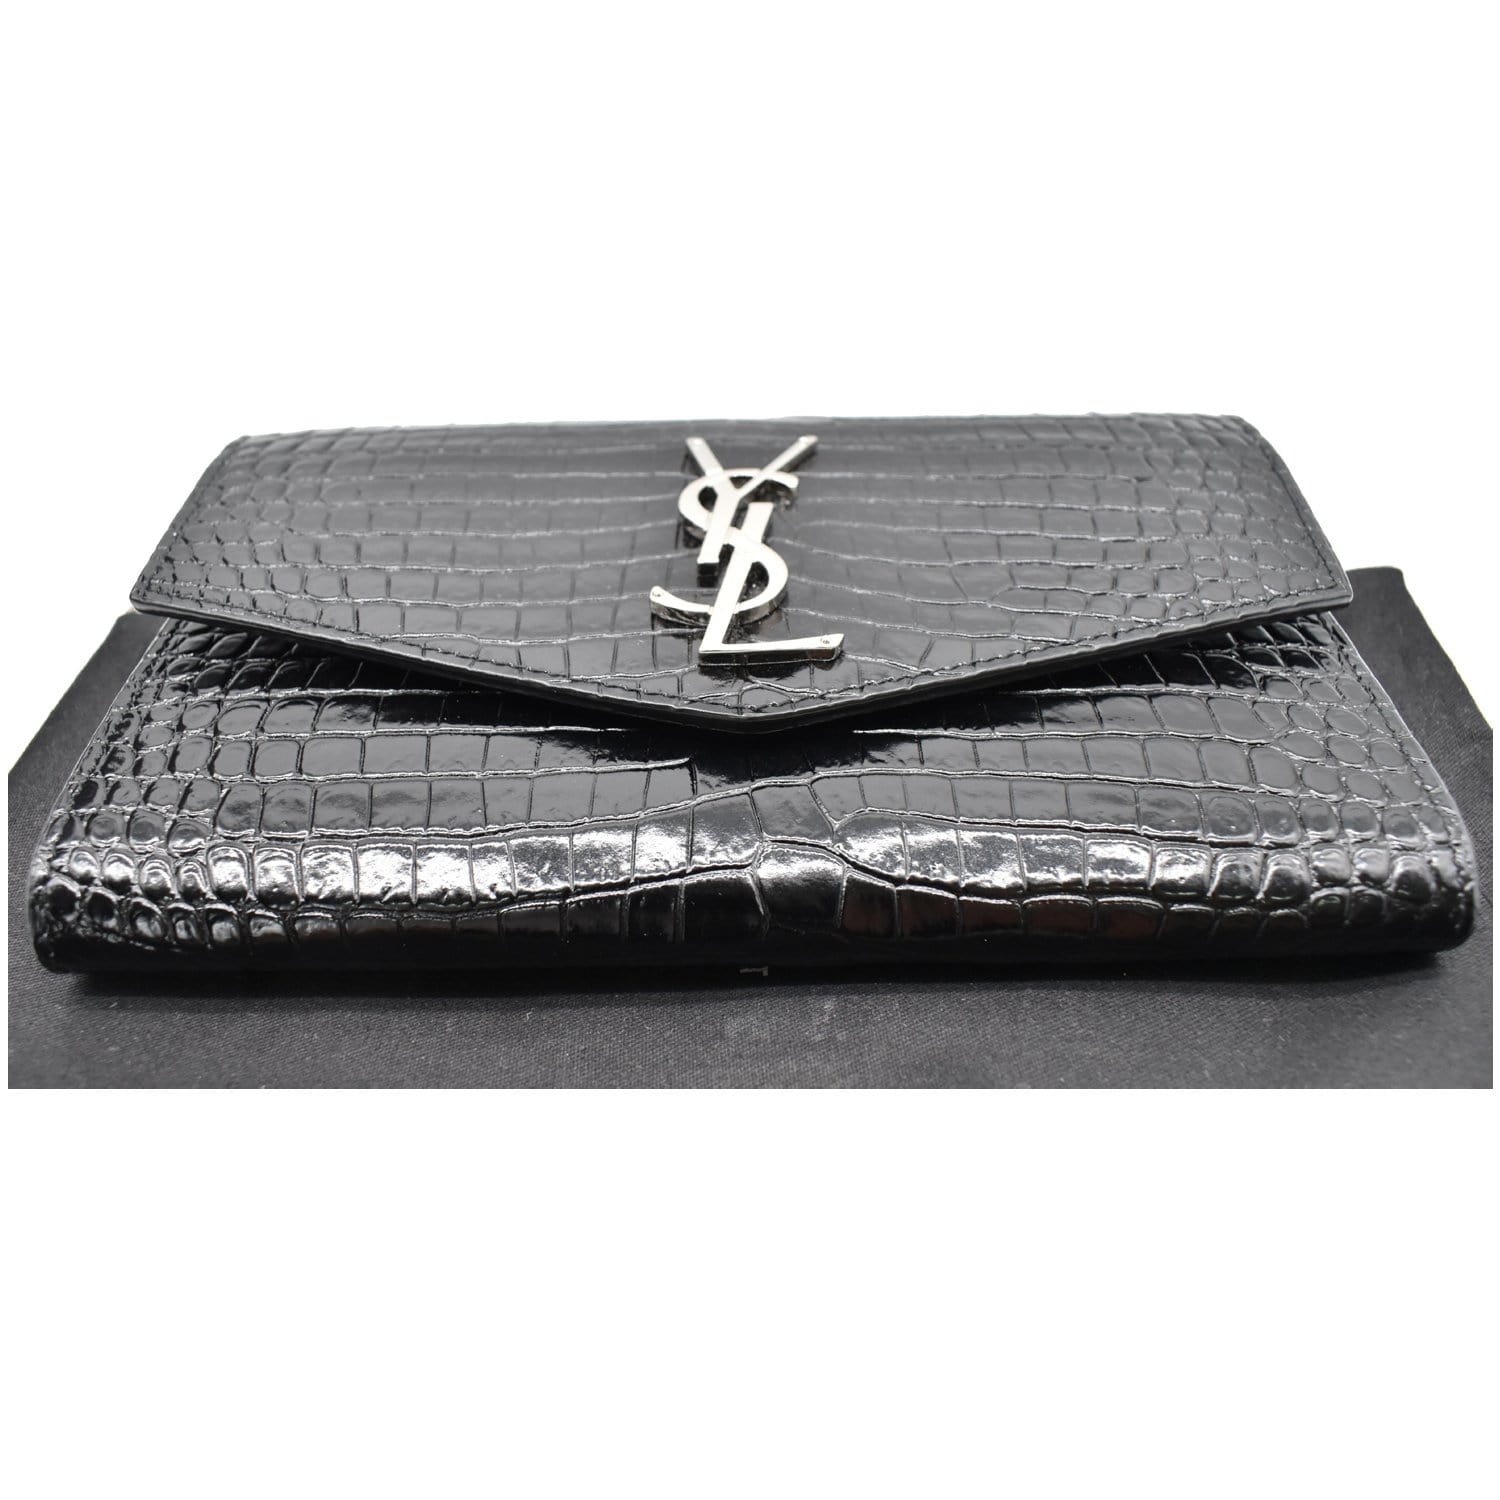 Wallet on chain crocodile crossbody bag Chanel Black in Crocodile - 27307004